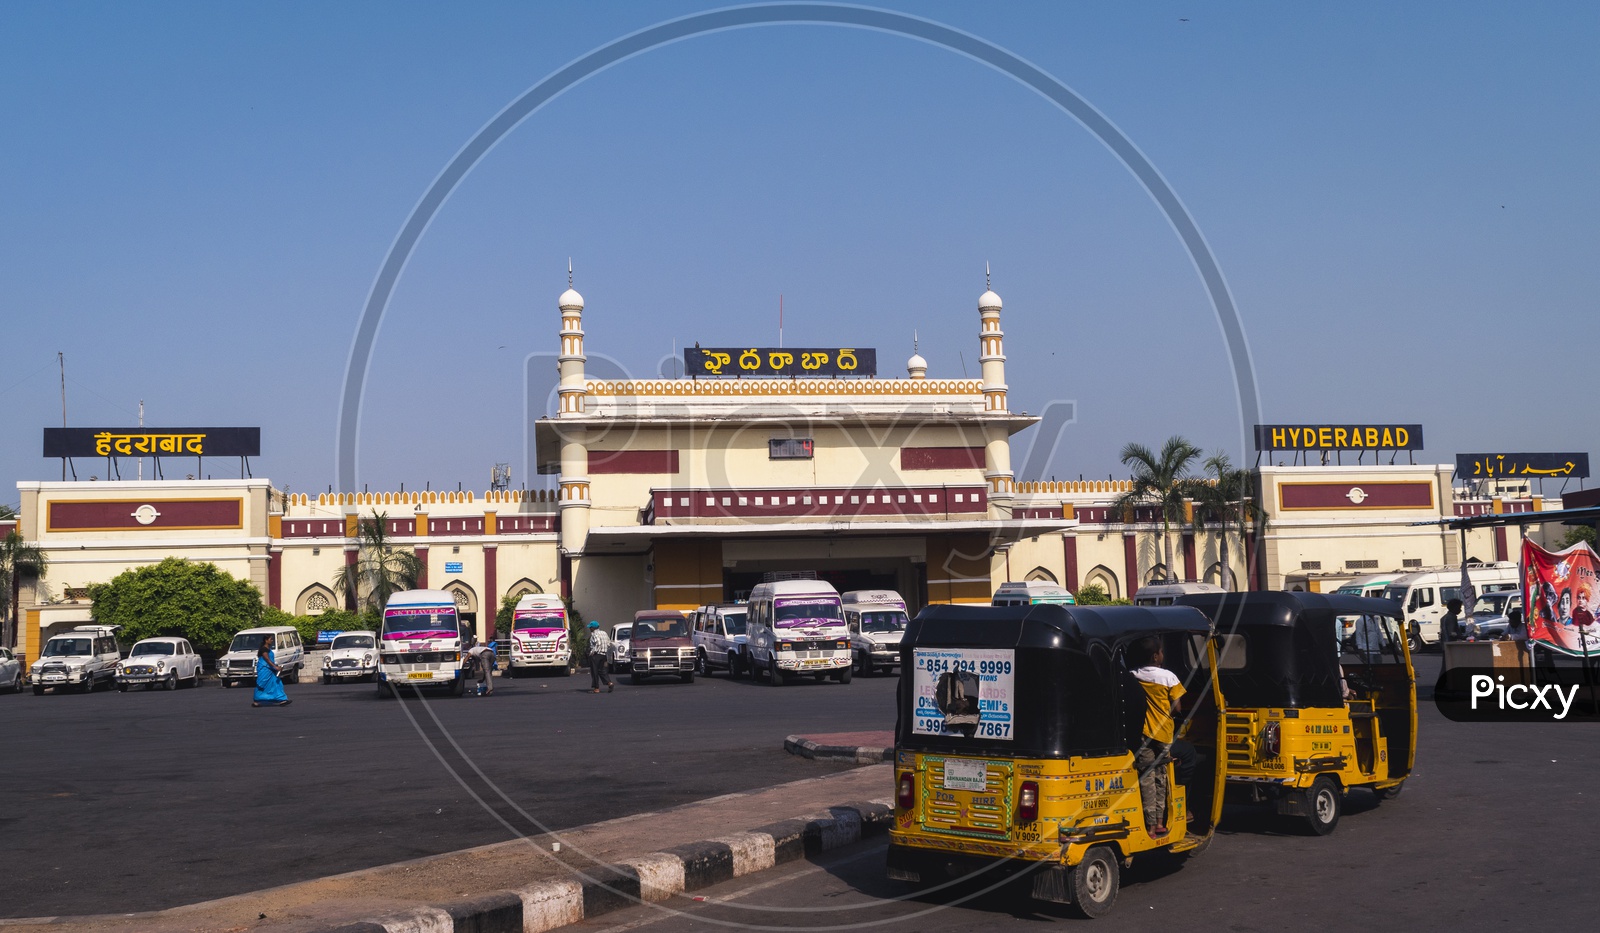 Hyderabad Deccan railway station